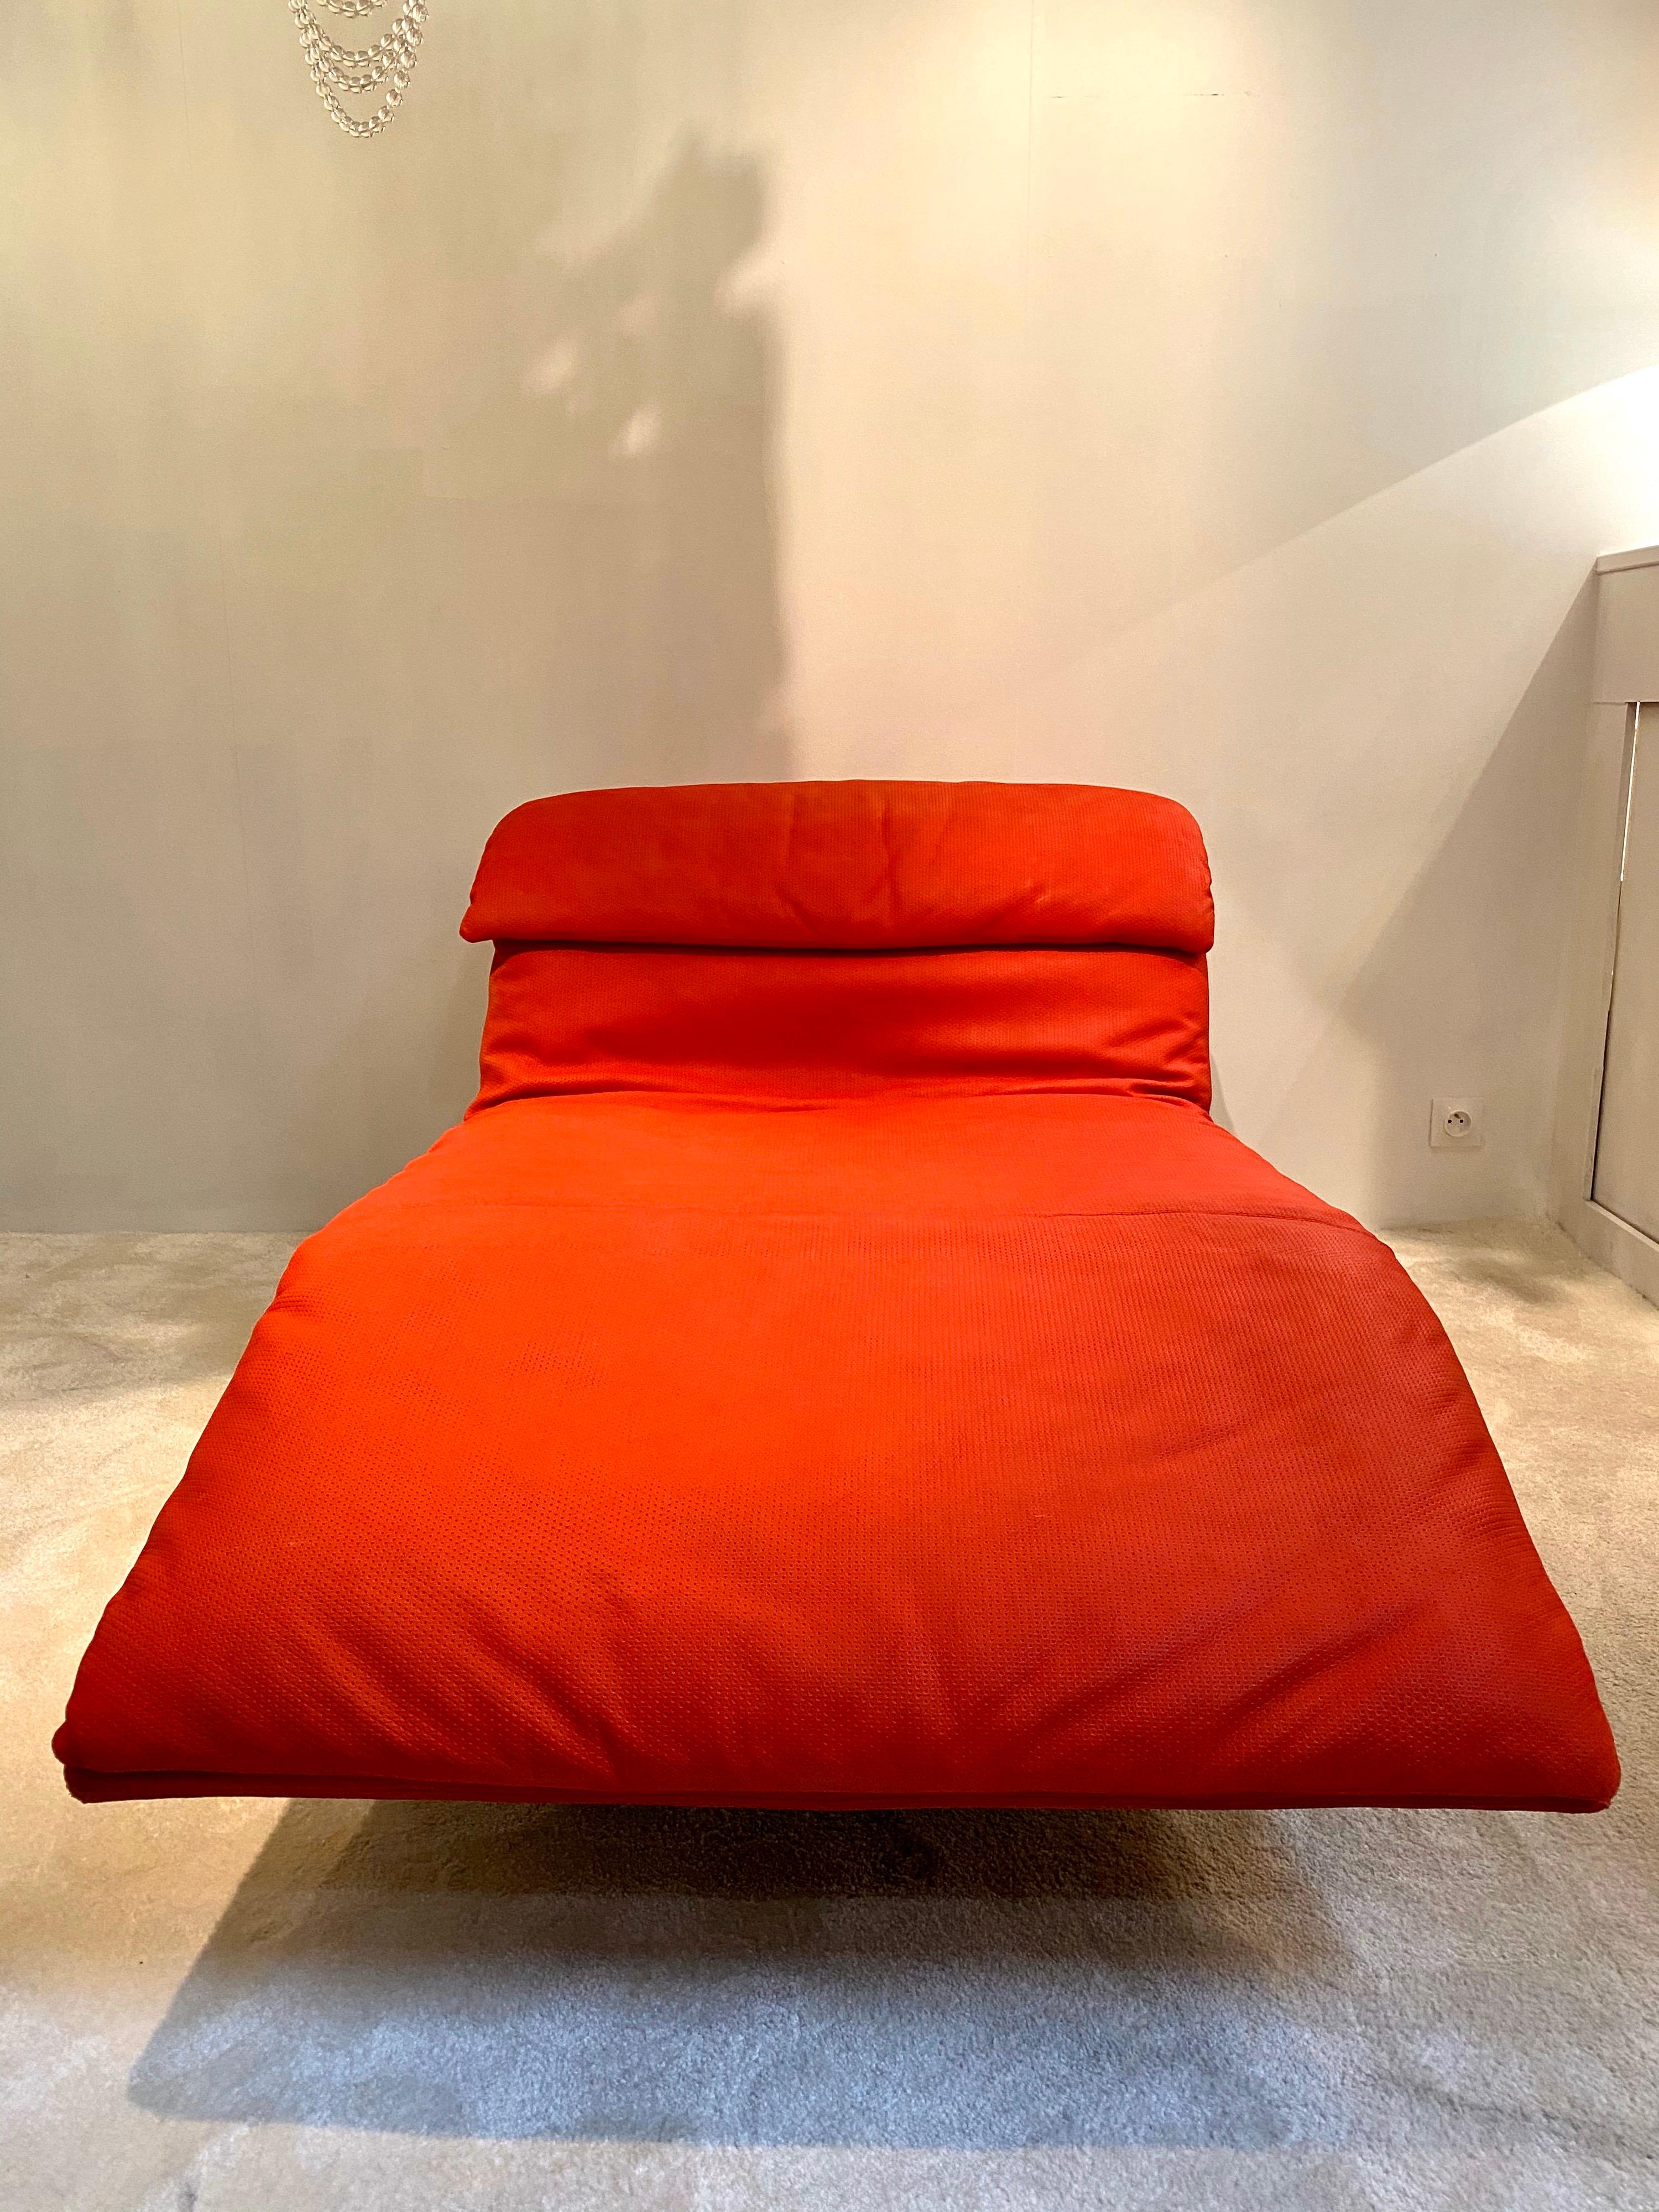 Giovanni Offredi “Wave” Lounge Chair for Saporiti, 1974 For Sale 2